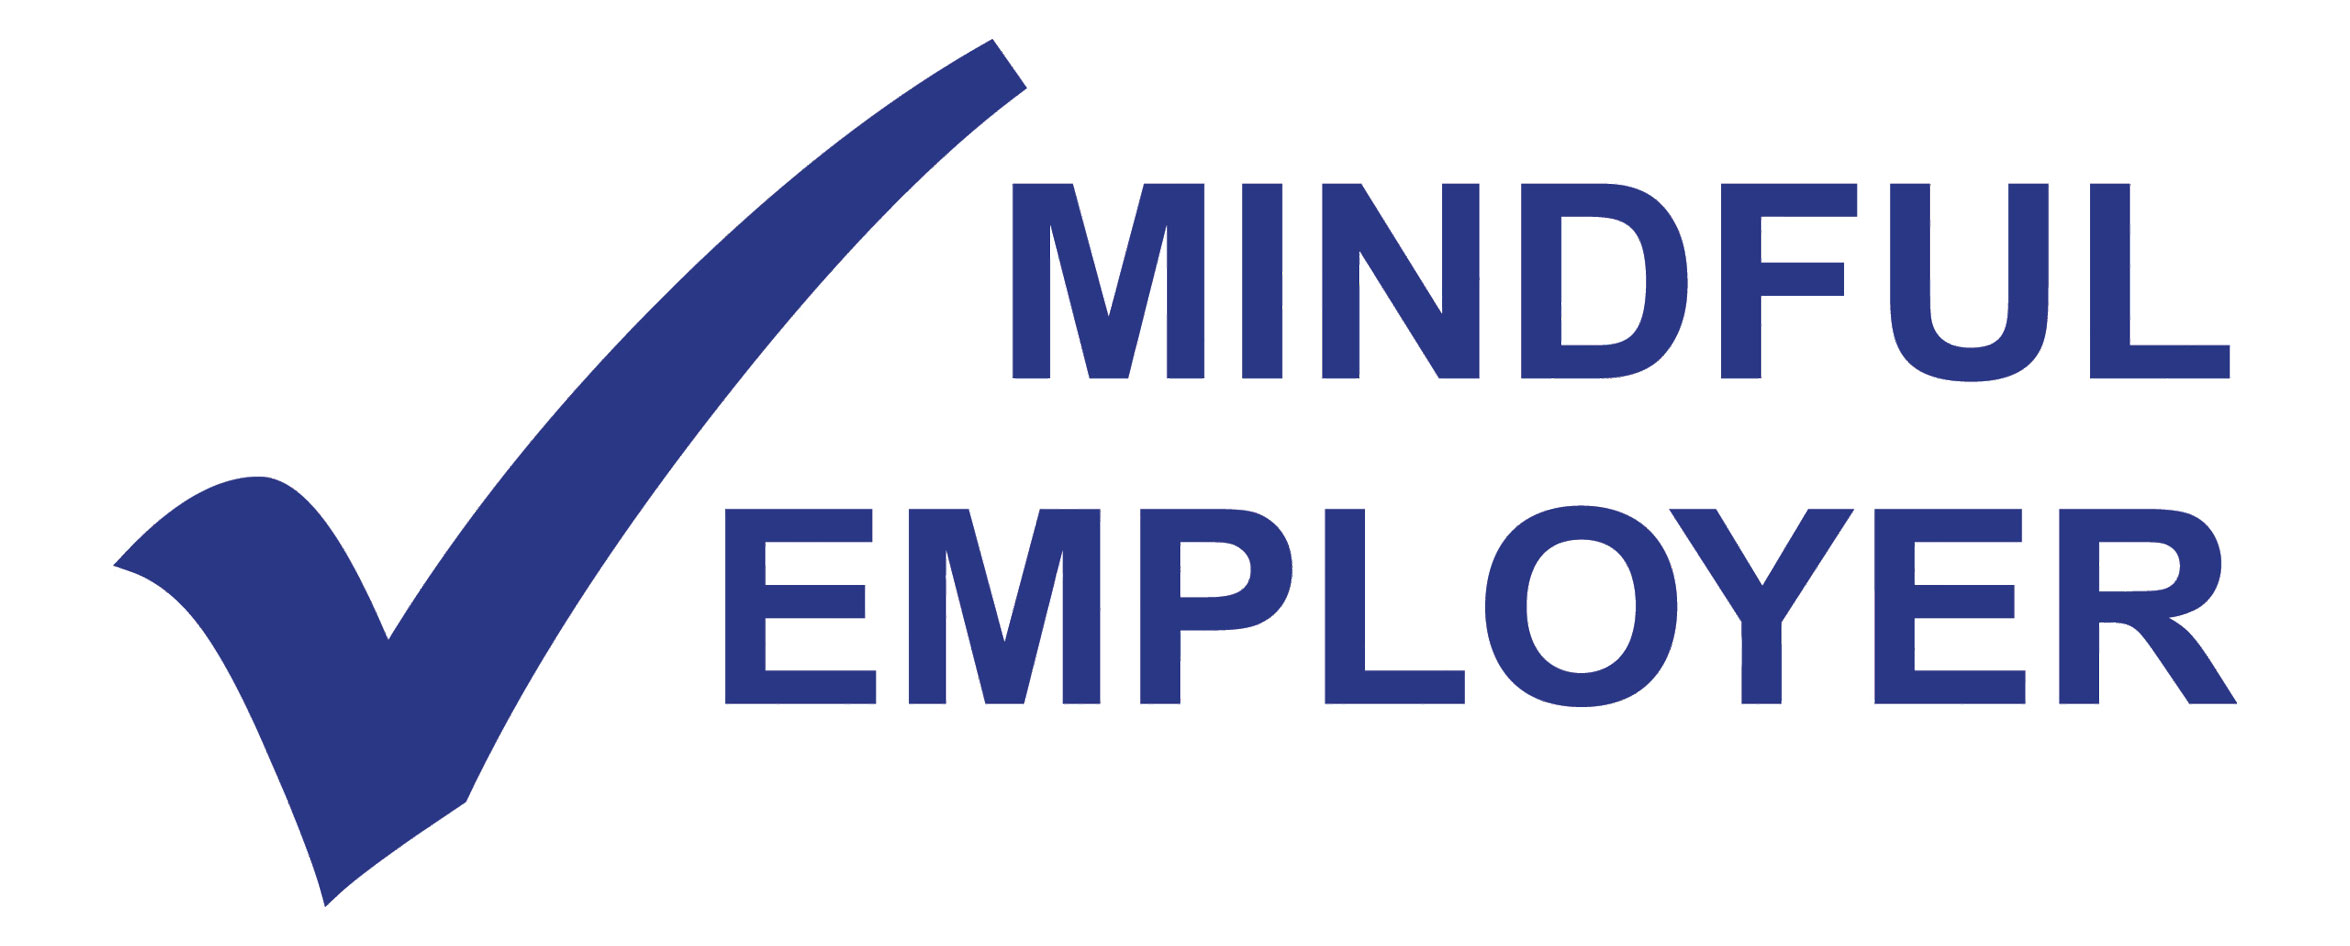 mindful employer logo, blue tick